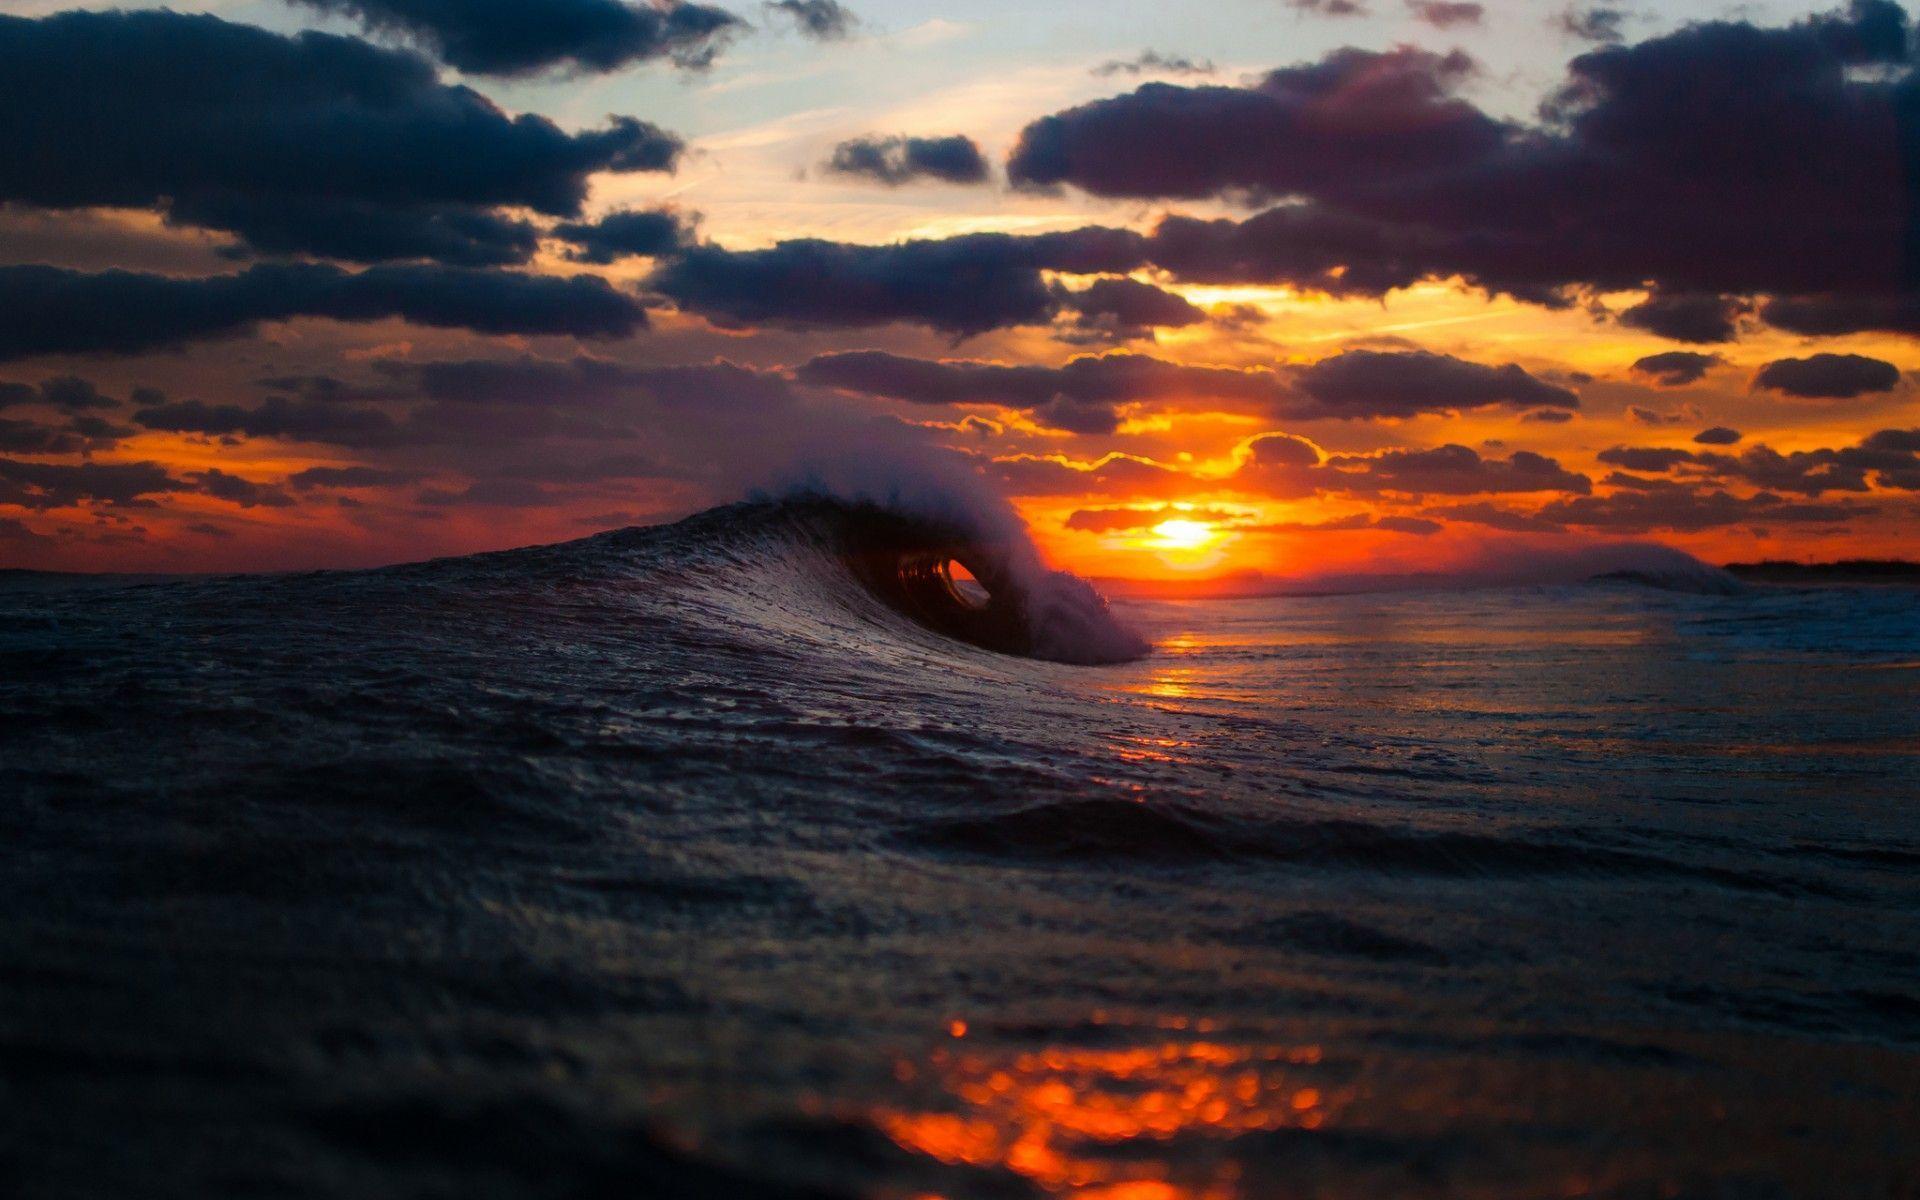 Ocean Sunset Wallpapers - Top Free Ocean Sunset Backgrounds ...